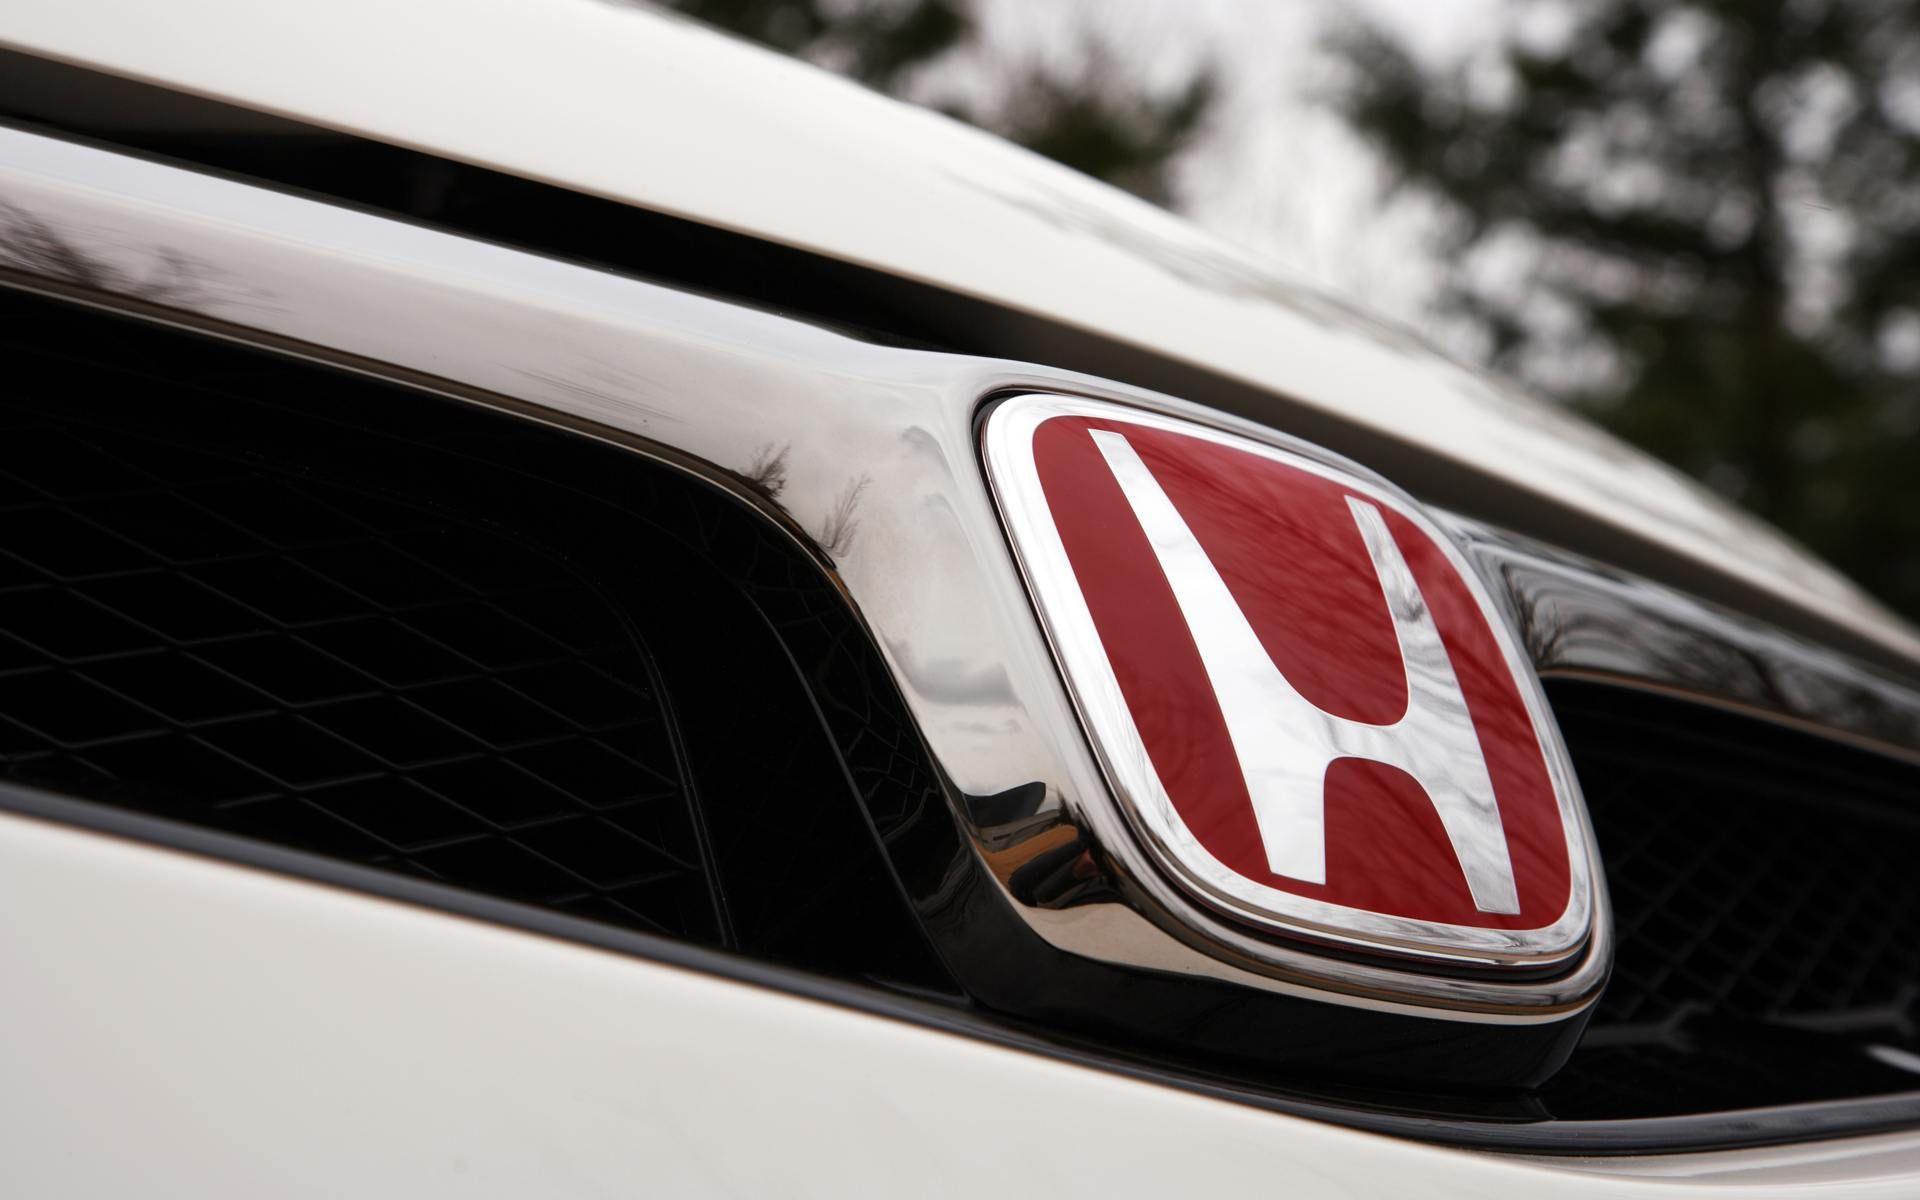 HD Honda Logo Wallpaper